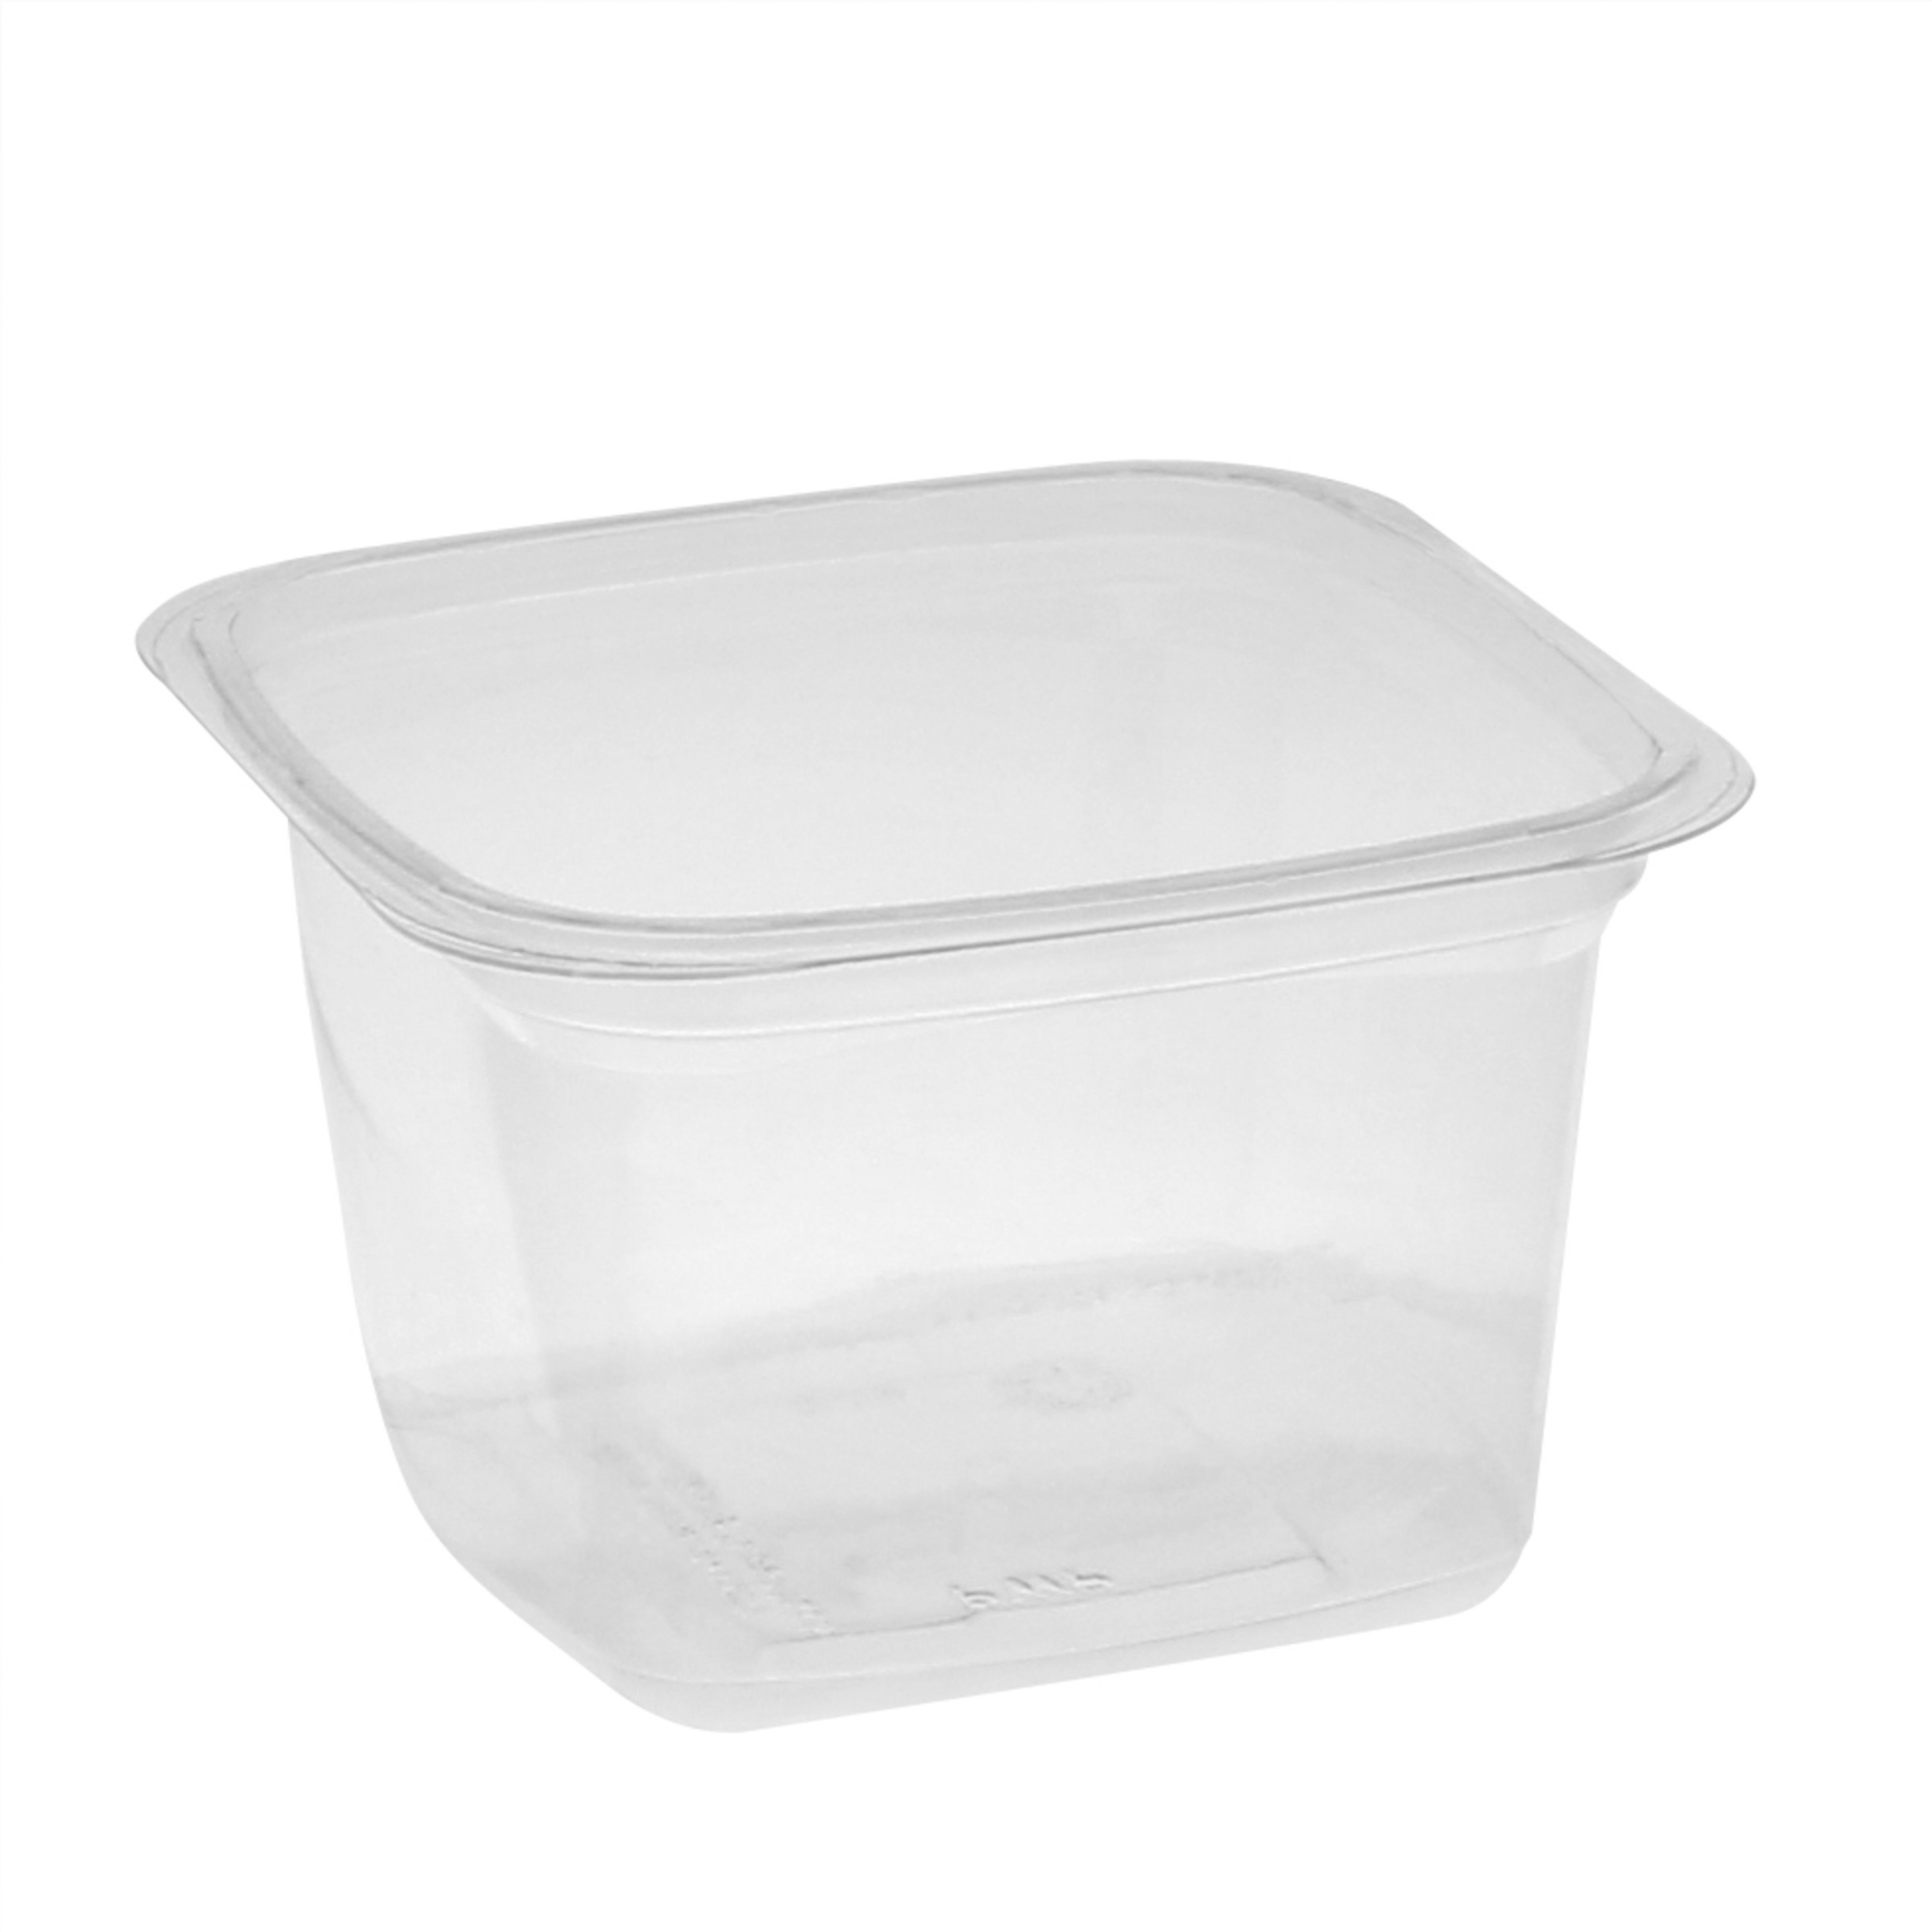 Pactiv 4S18Y 16 oz Square Deli Container Plastic Clear - Case of 480